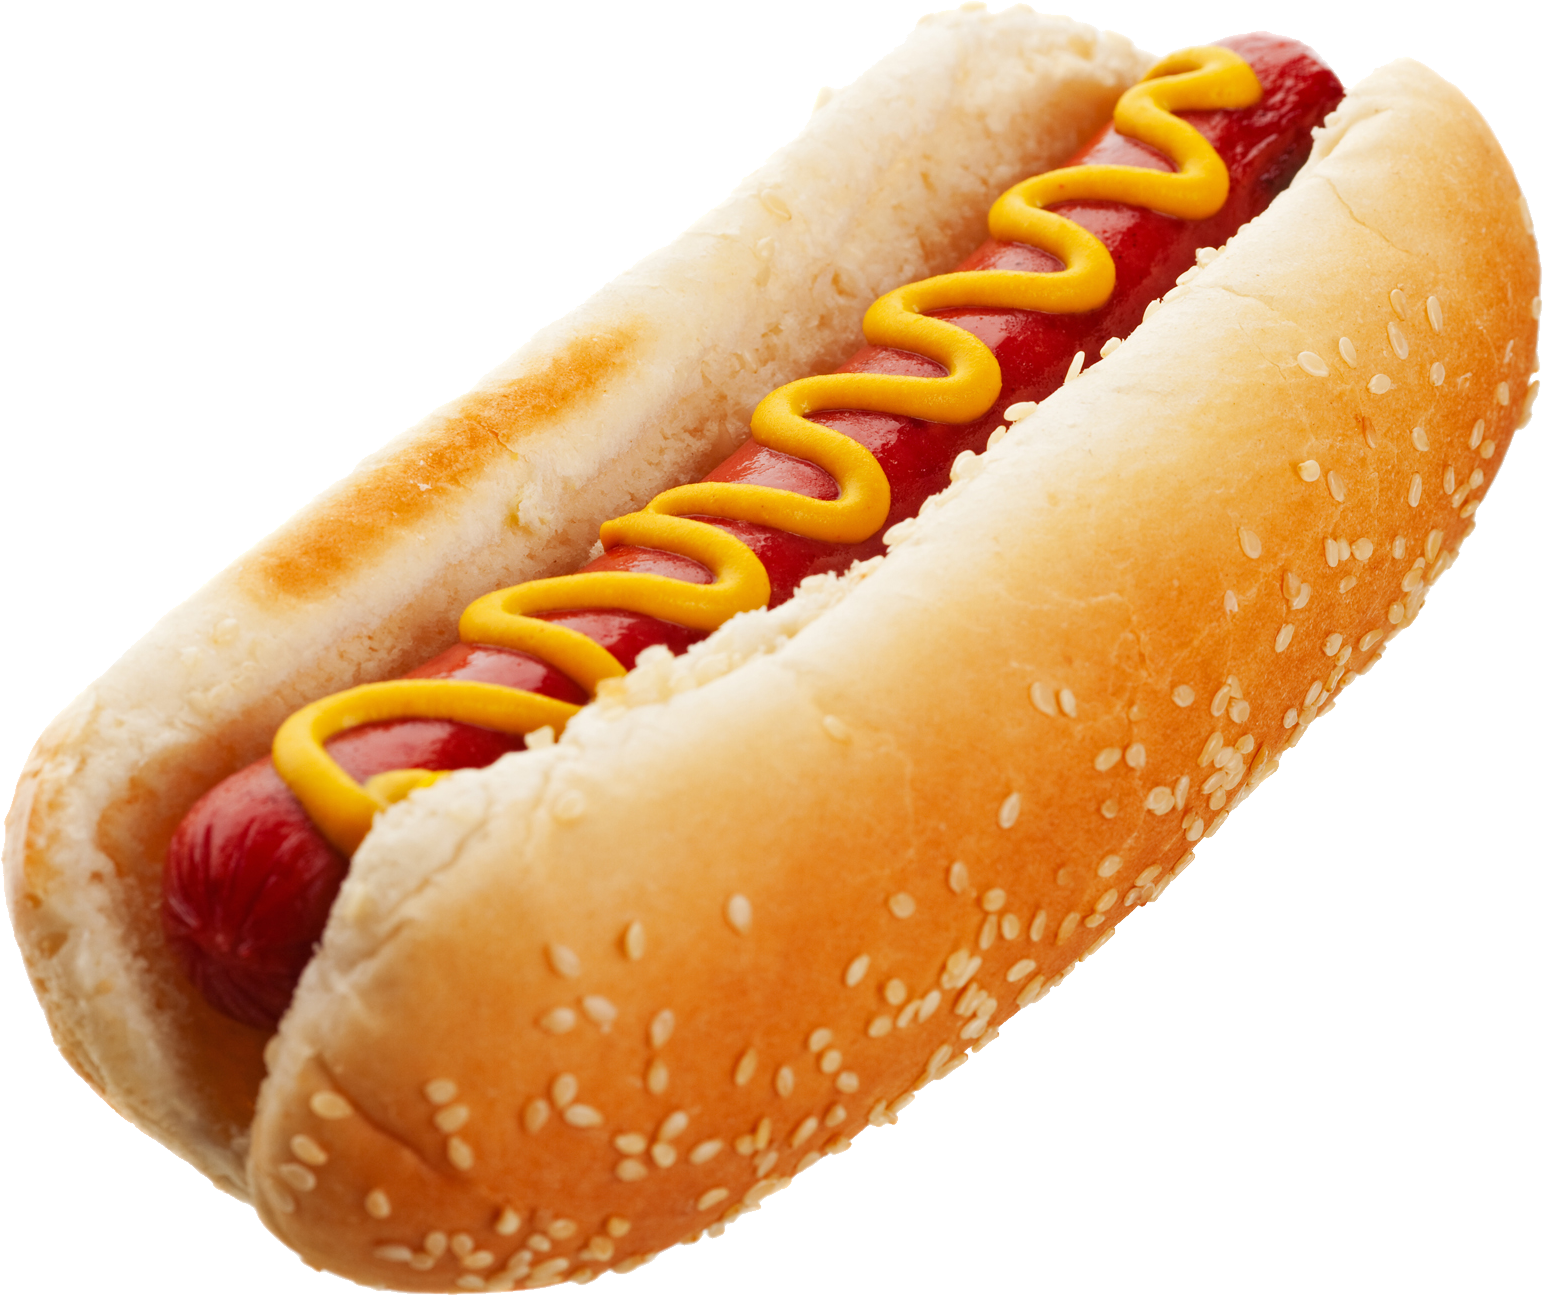 Hot Dog Png Image - Hot Dog, Transparent background PNG HD thumbnail